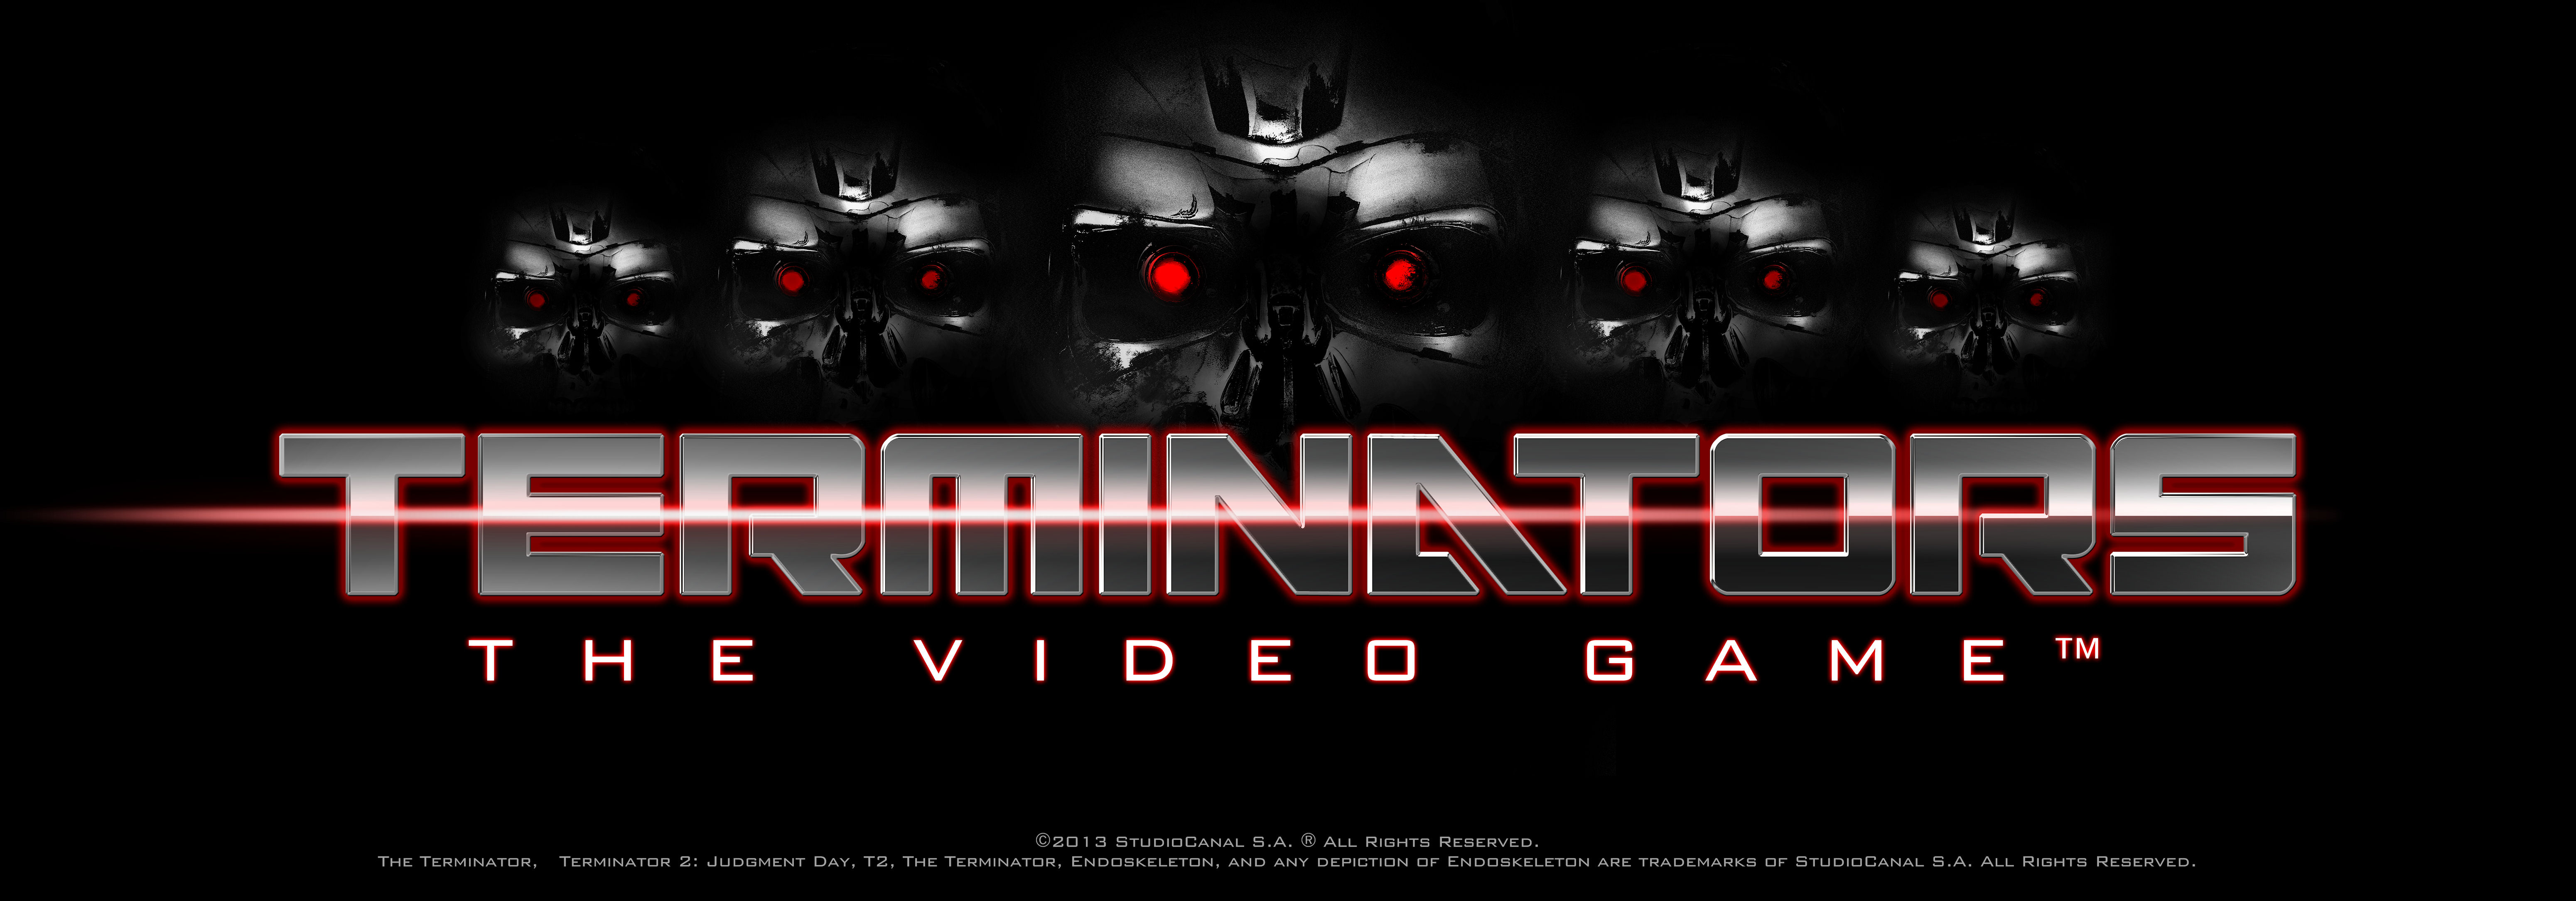 Wydawca Rambo: The Video Game zapowiada... Terminators: The Video Game!